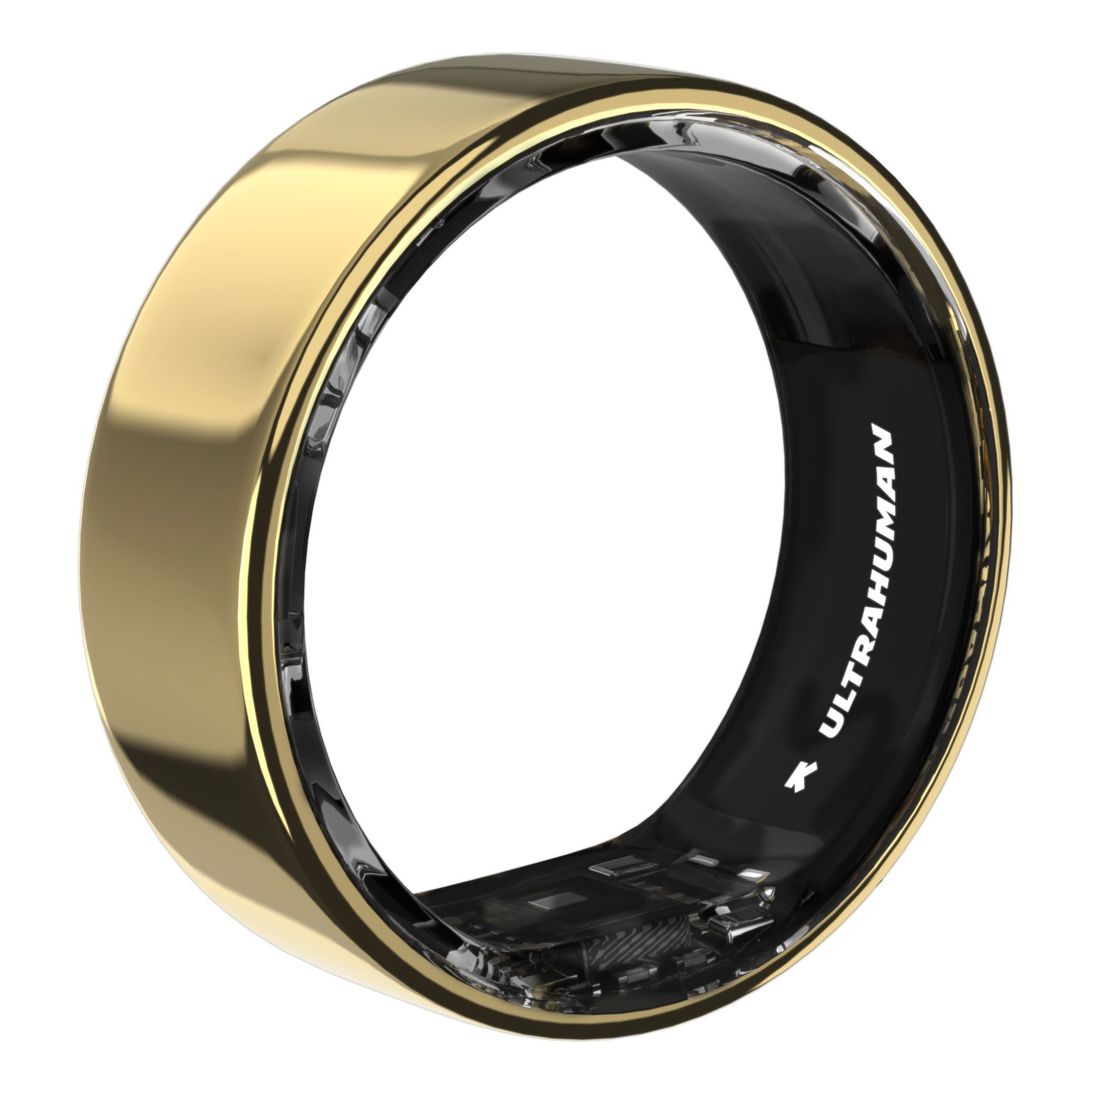 Ultrahuman Ring AIR Smart Ring - Size 13 - Bionic Gold